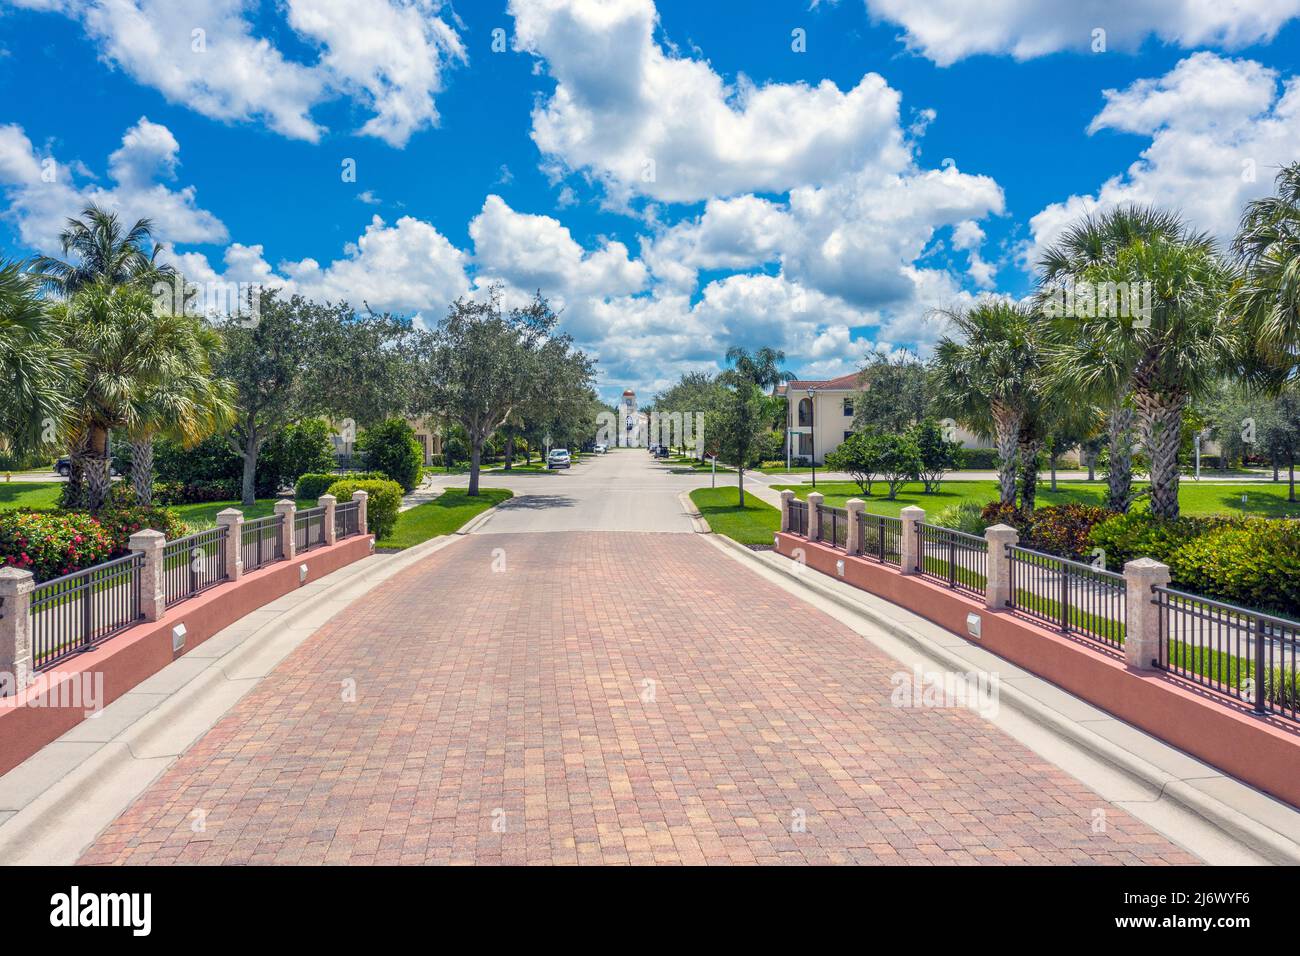 Veronawalk Gemeinschaft, Naples Florida Real Estate Ruhestand Baby Boomer Stockfoto